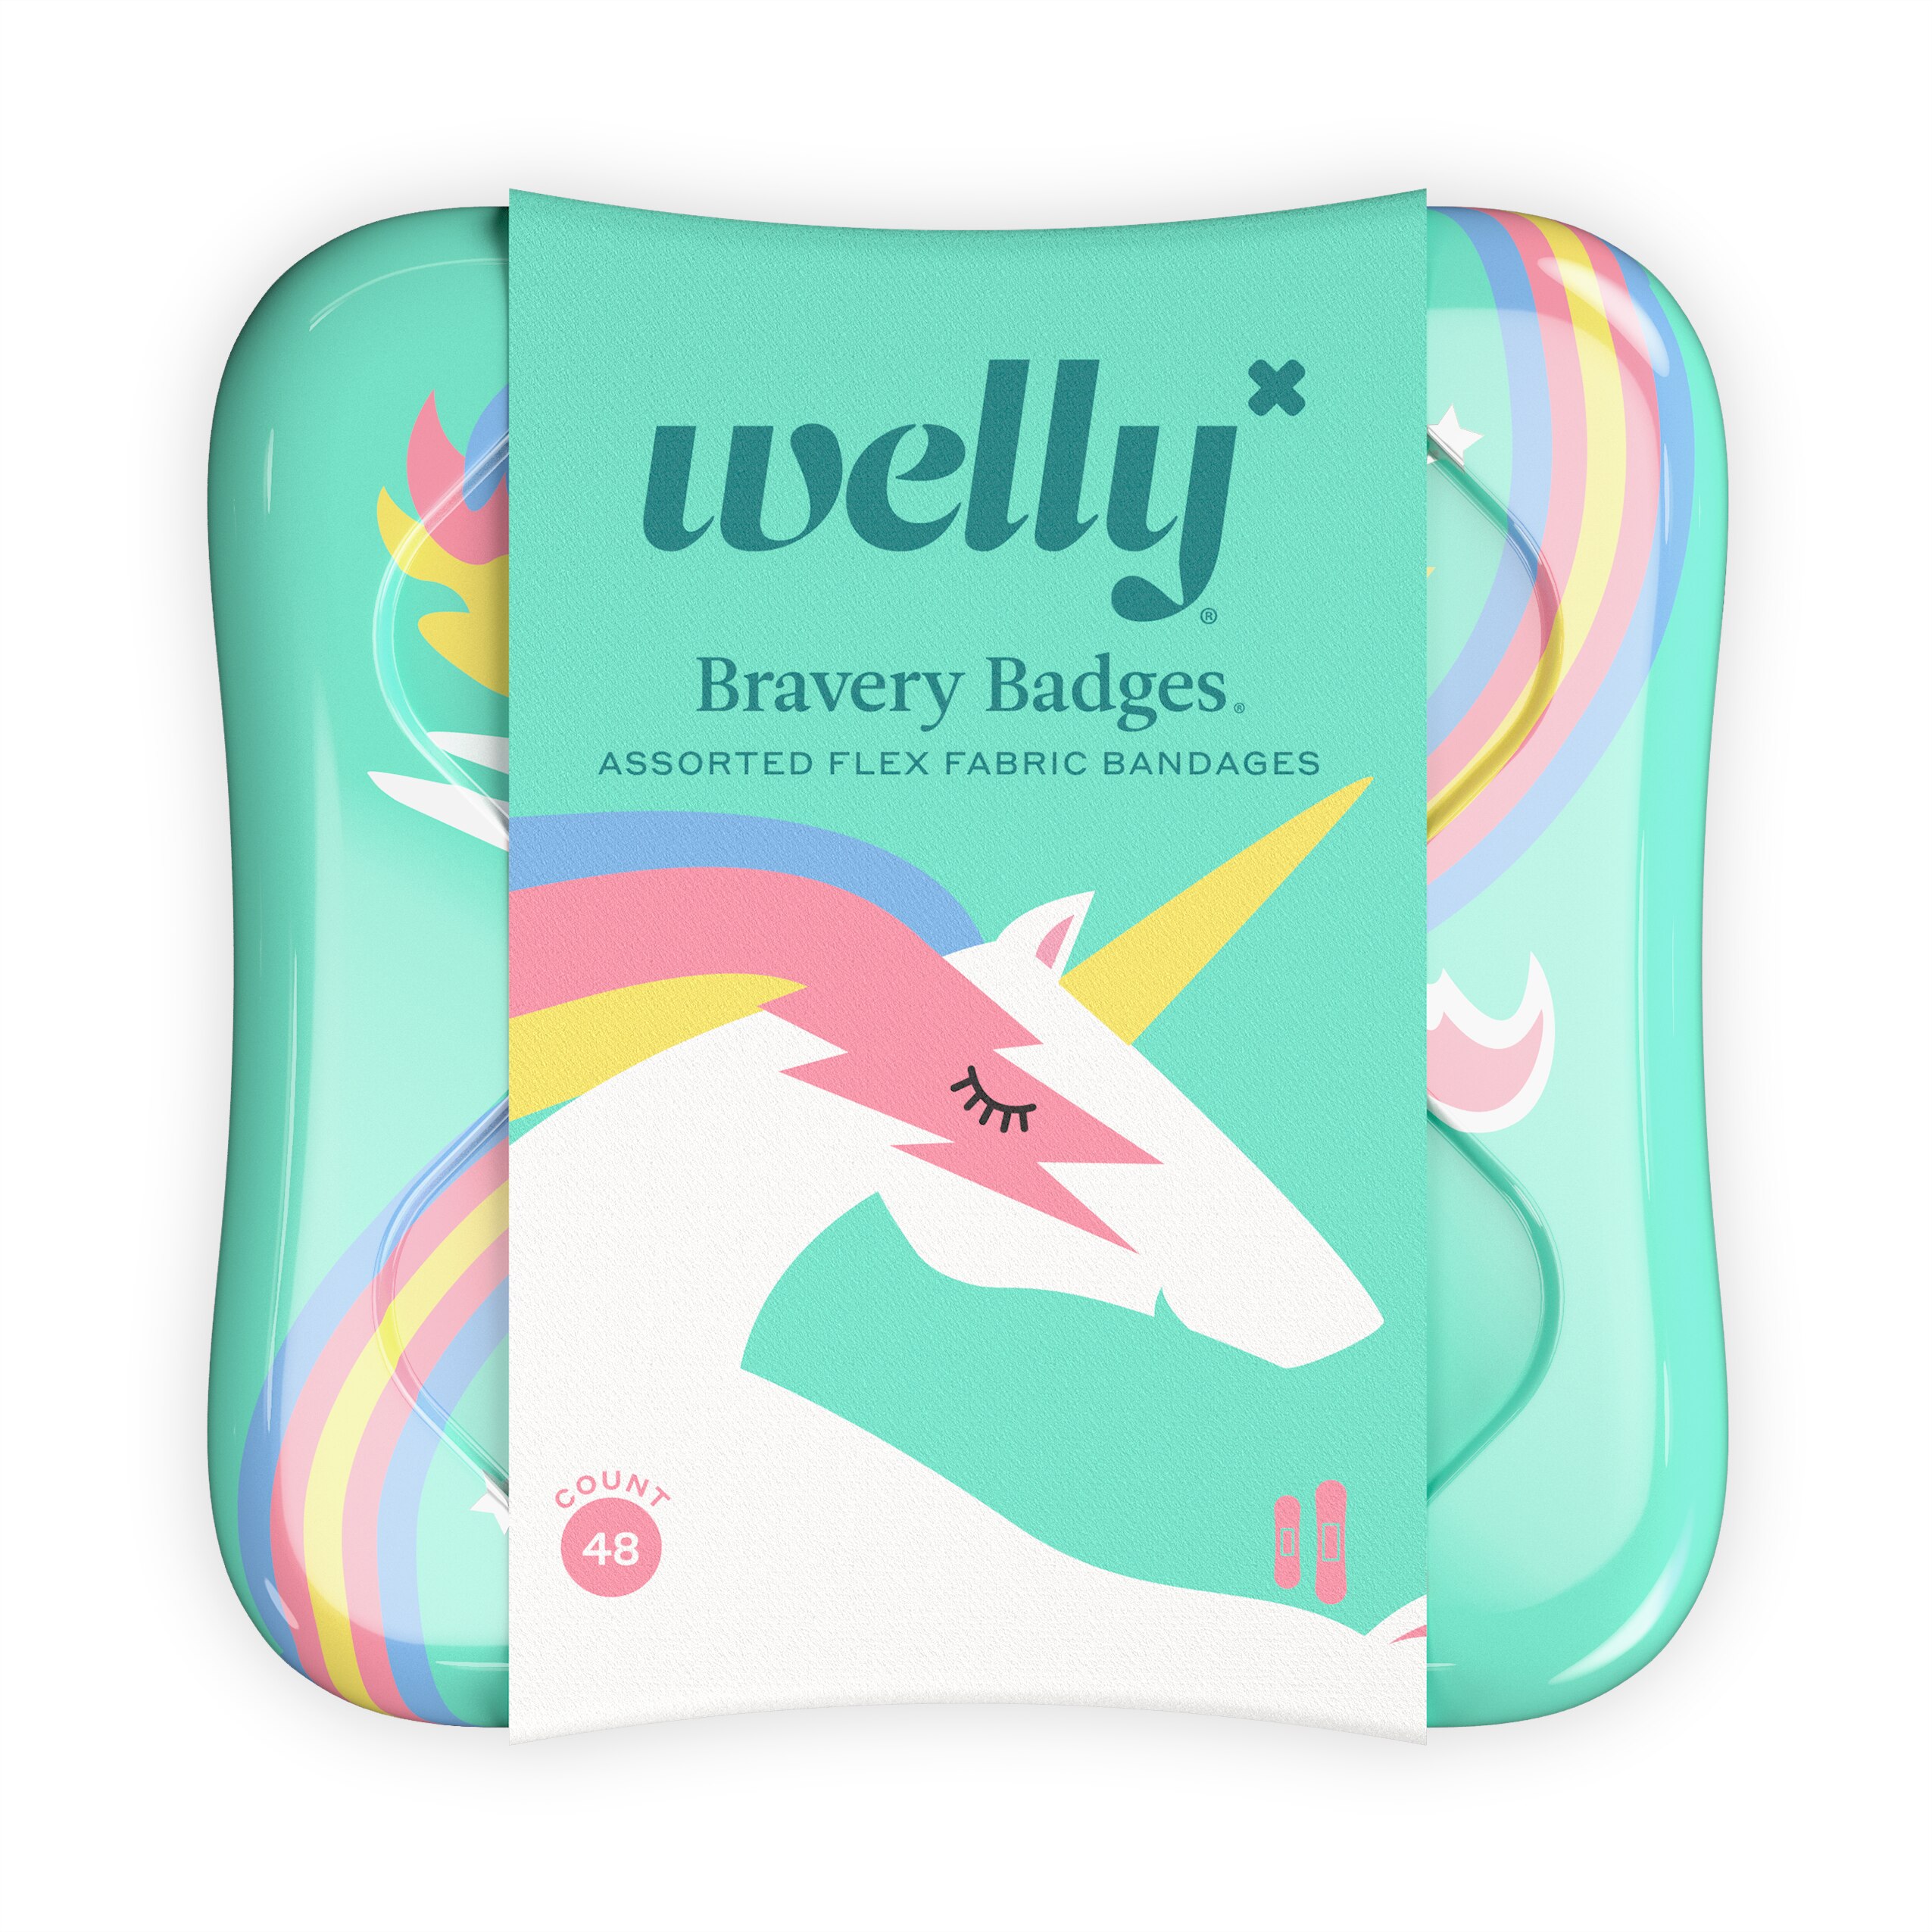 Welly Bravery Badges Unicorn, 48 CT